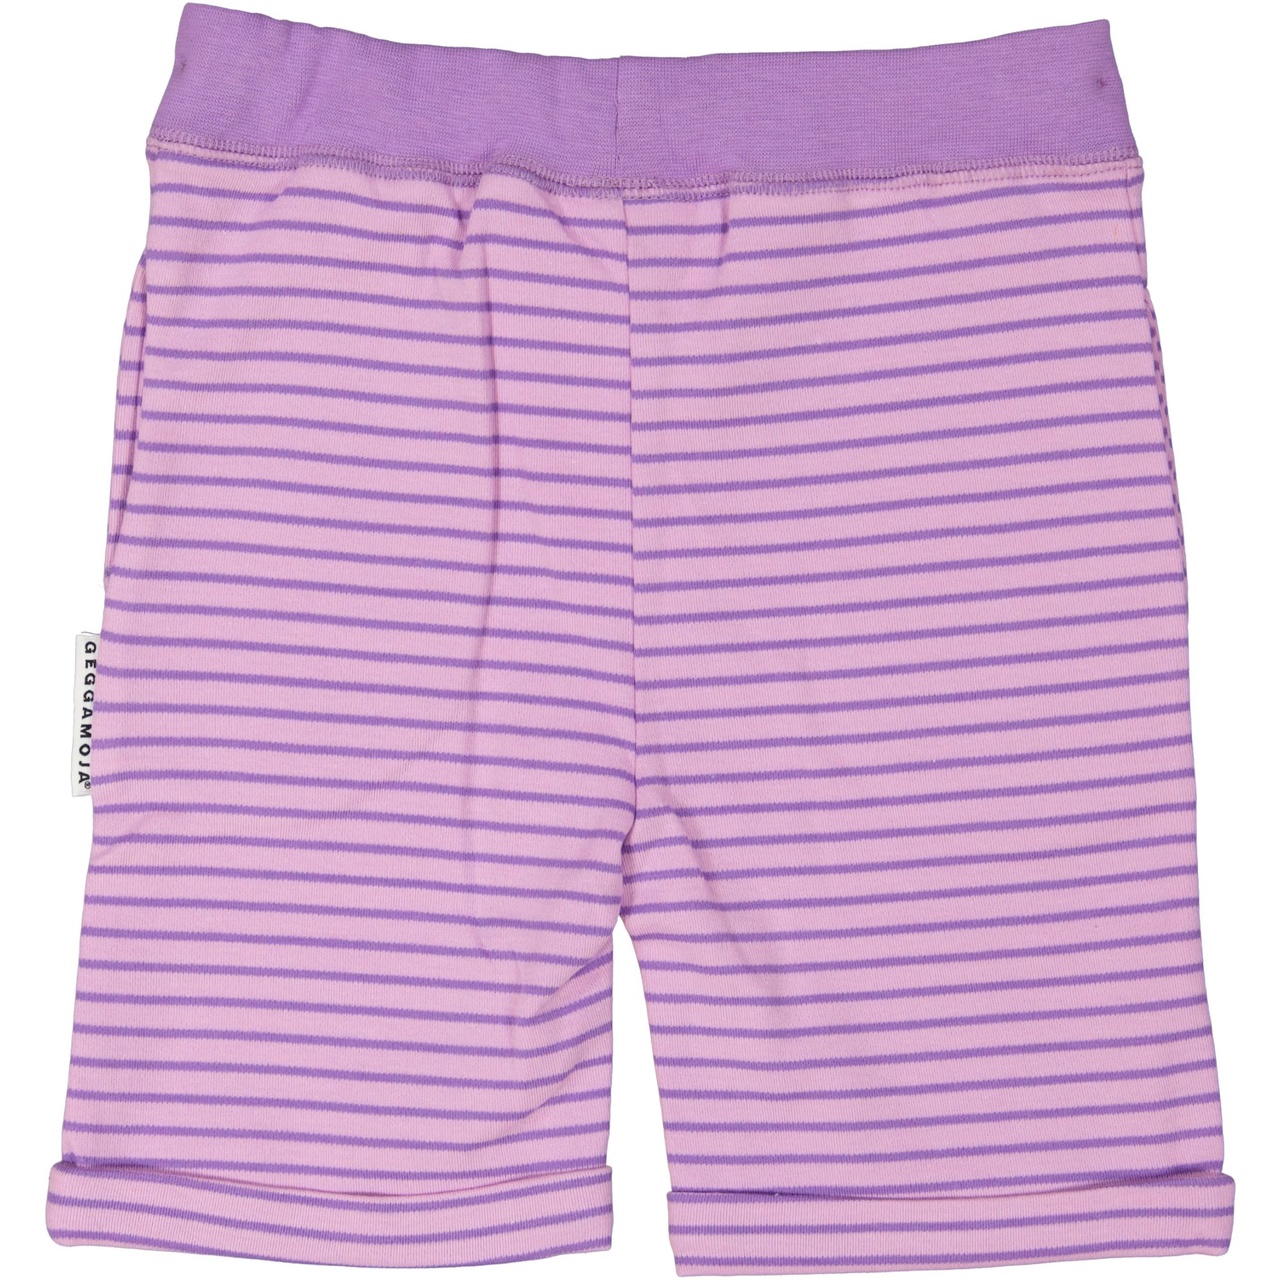 Shorts L.purple/purple  62/68